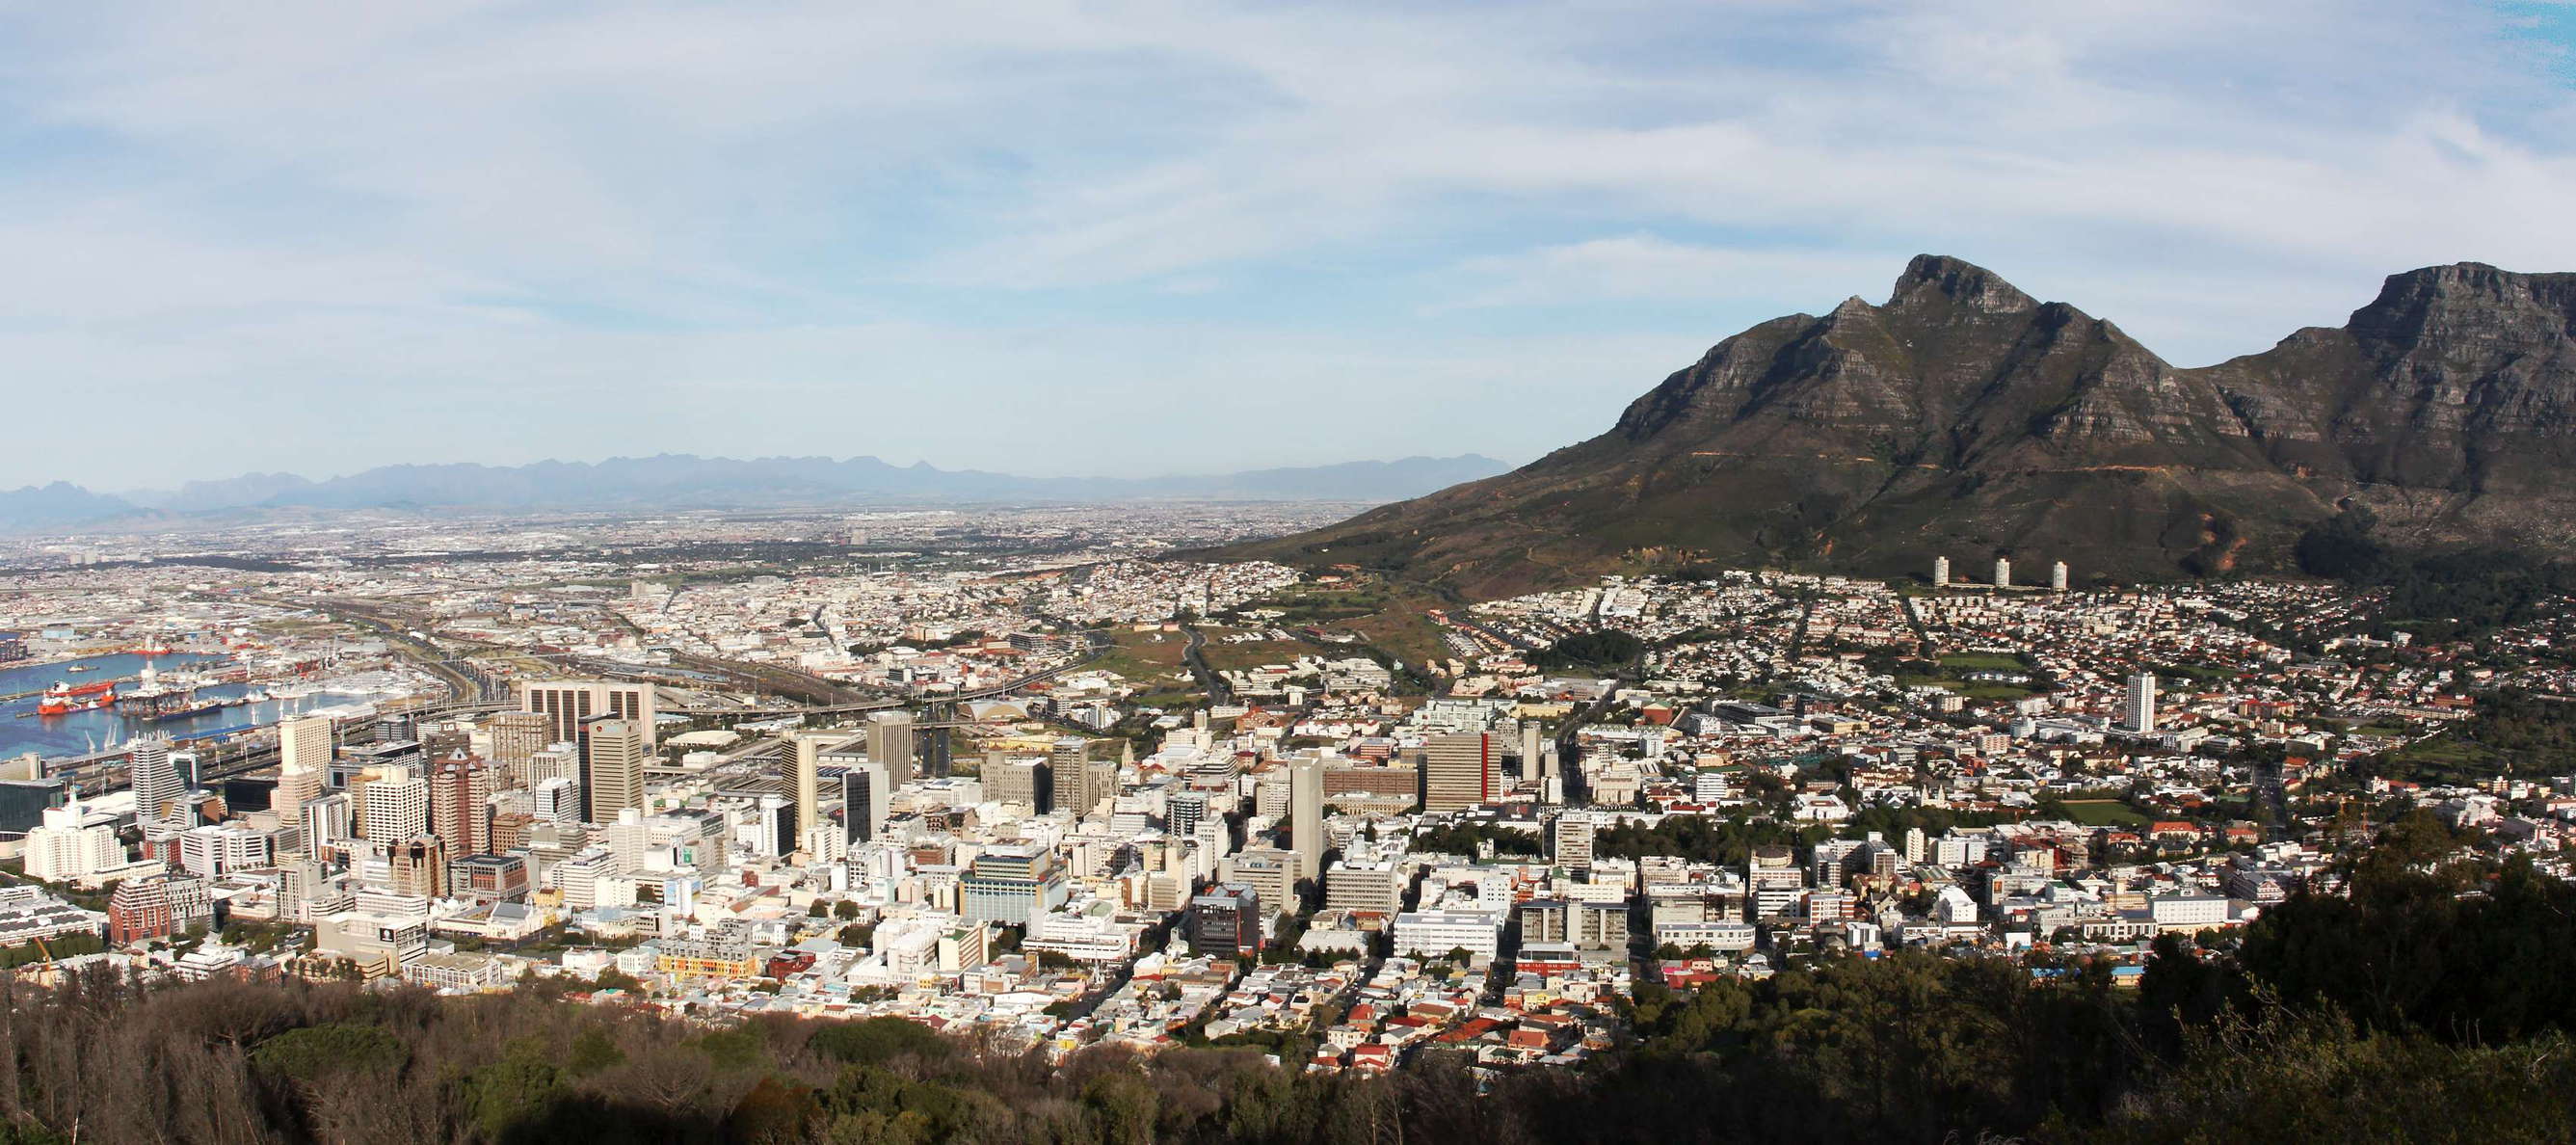 Cape Town with Devil's Peak